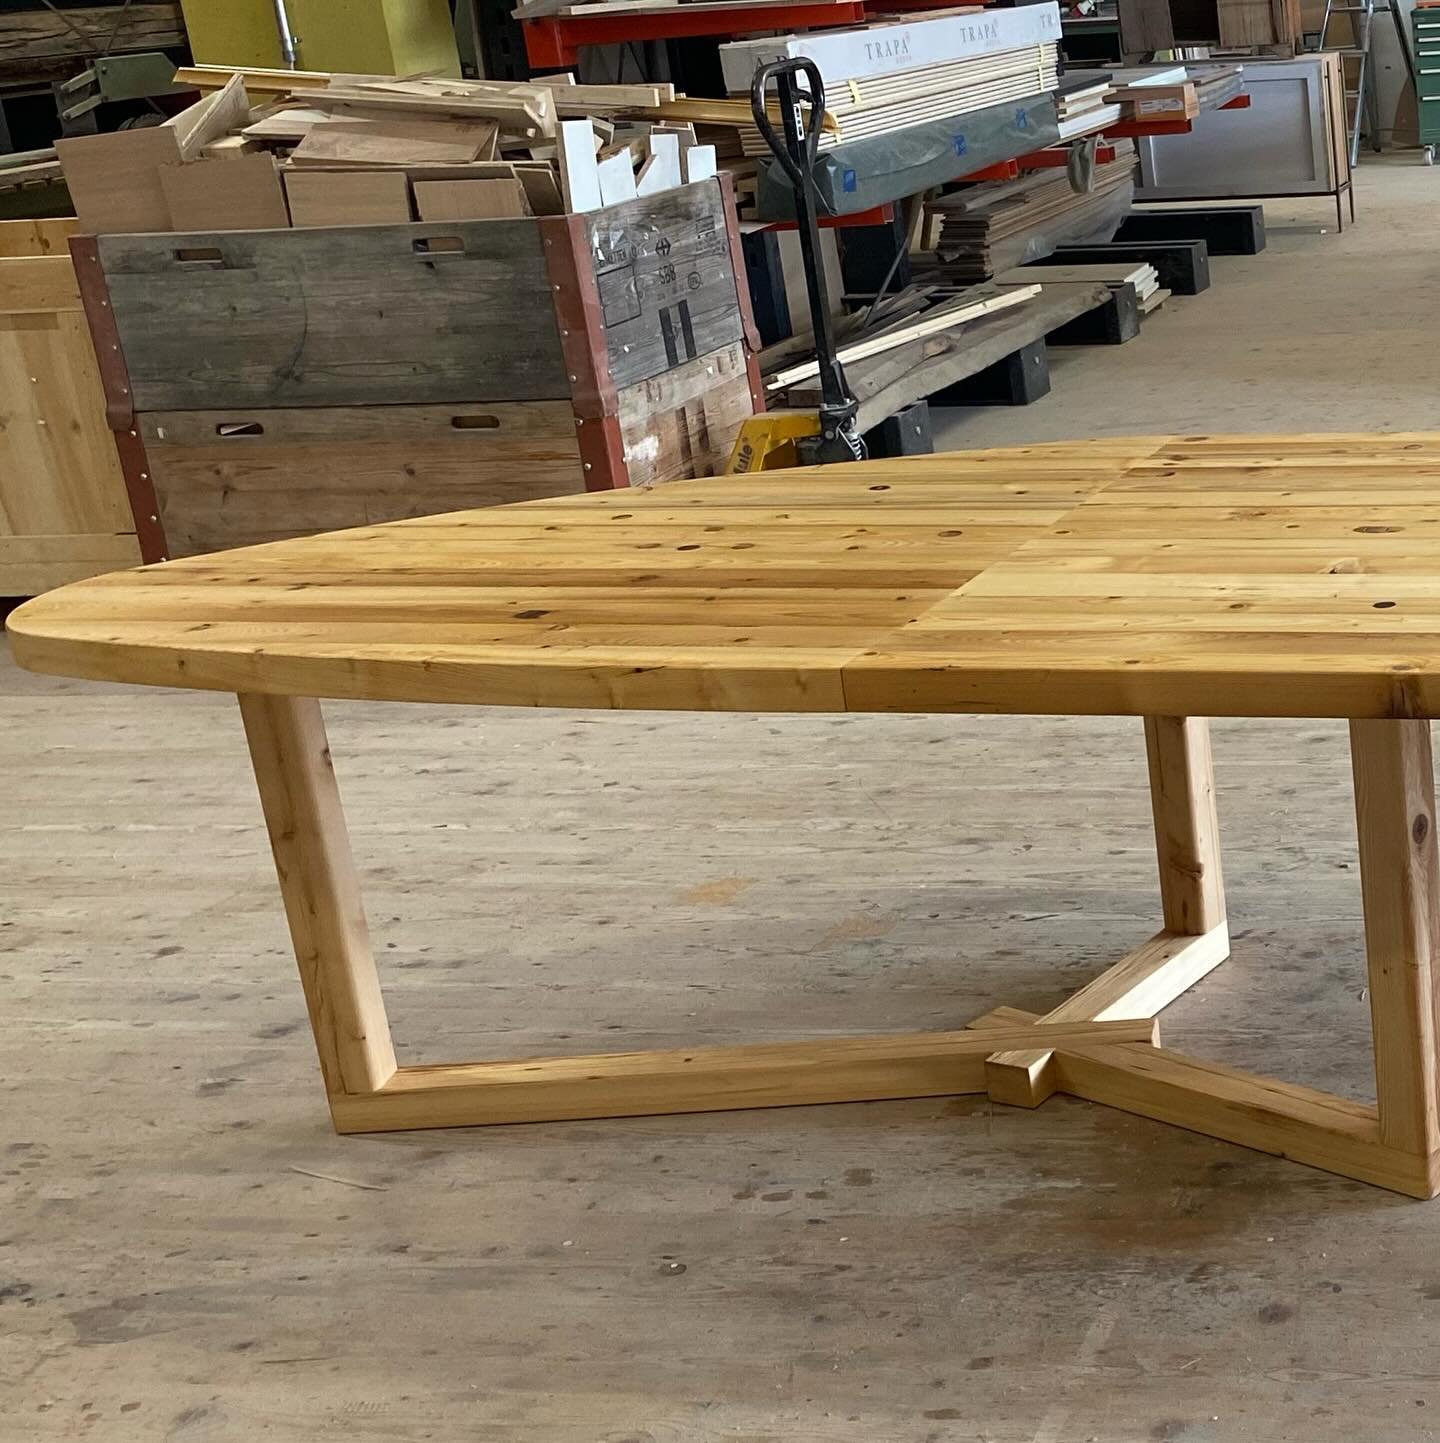 Custom made extendable 8 to 12 person table made from reclaimed wood from a barn. 
#woodentable #reuse #woodwork #designertable #handmade #woodworking #woodworker #swissmade #holztisch #schreiner #wiederverwendbar #wiederverwertung #